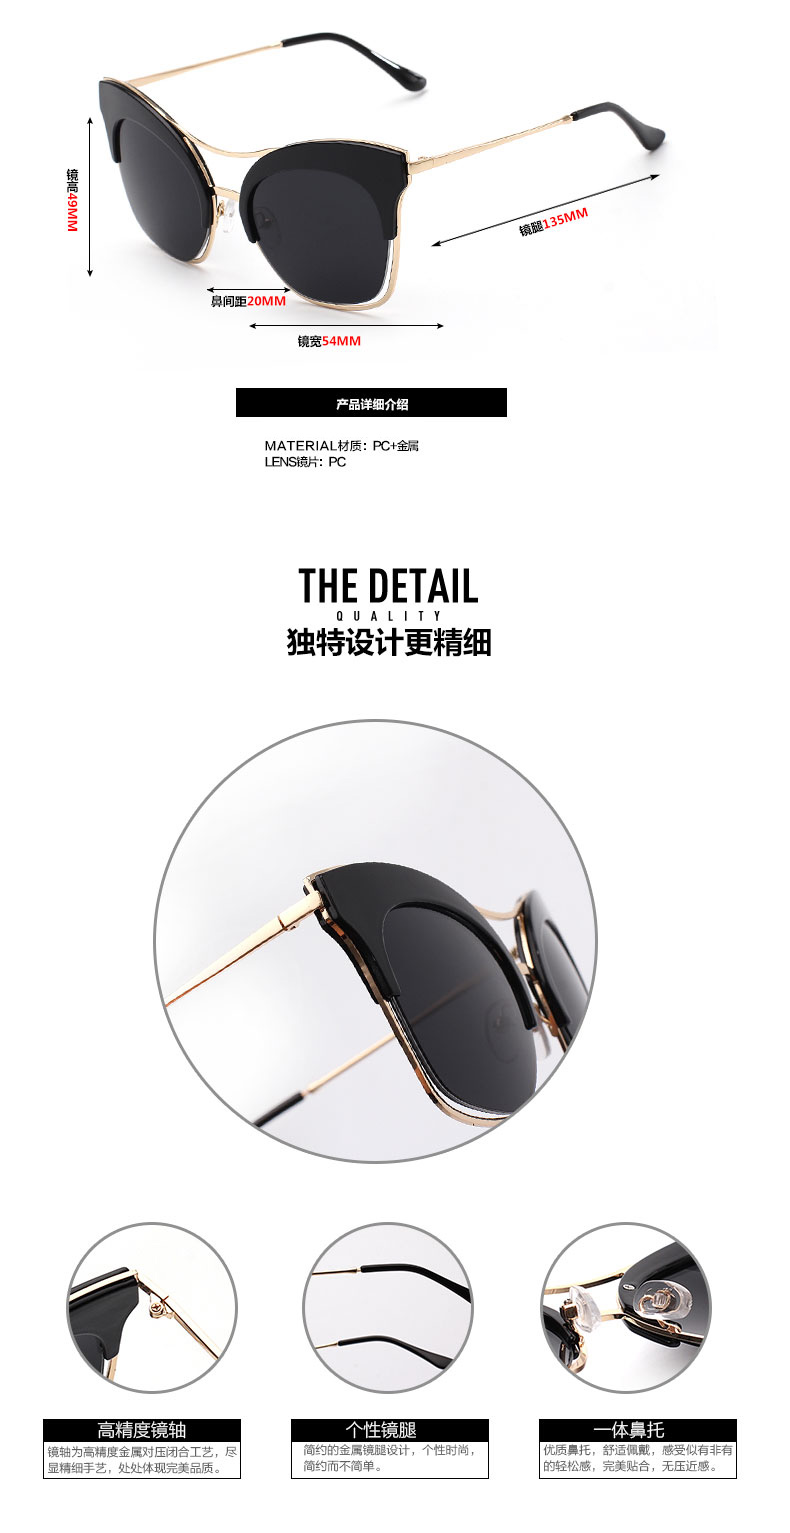 COSROVES 新款韩国V牌太阳镜 猫眼个性彩膜大牌墨镜SG15014